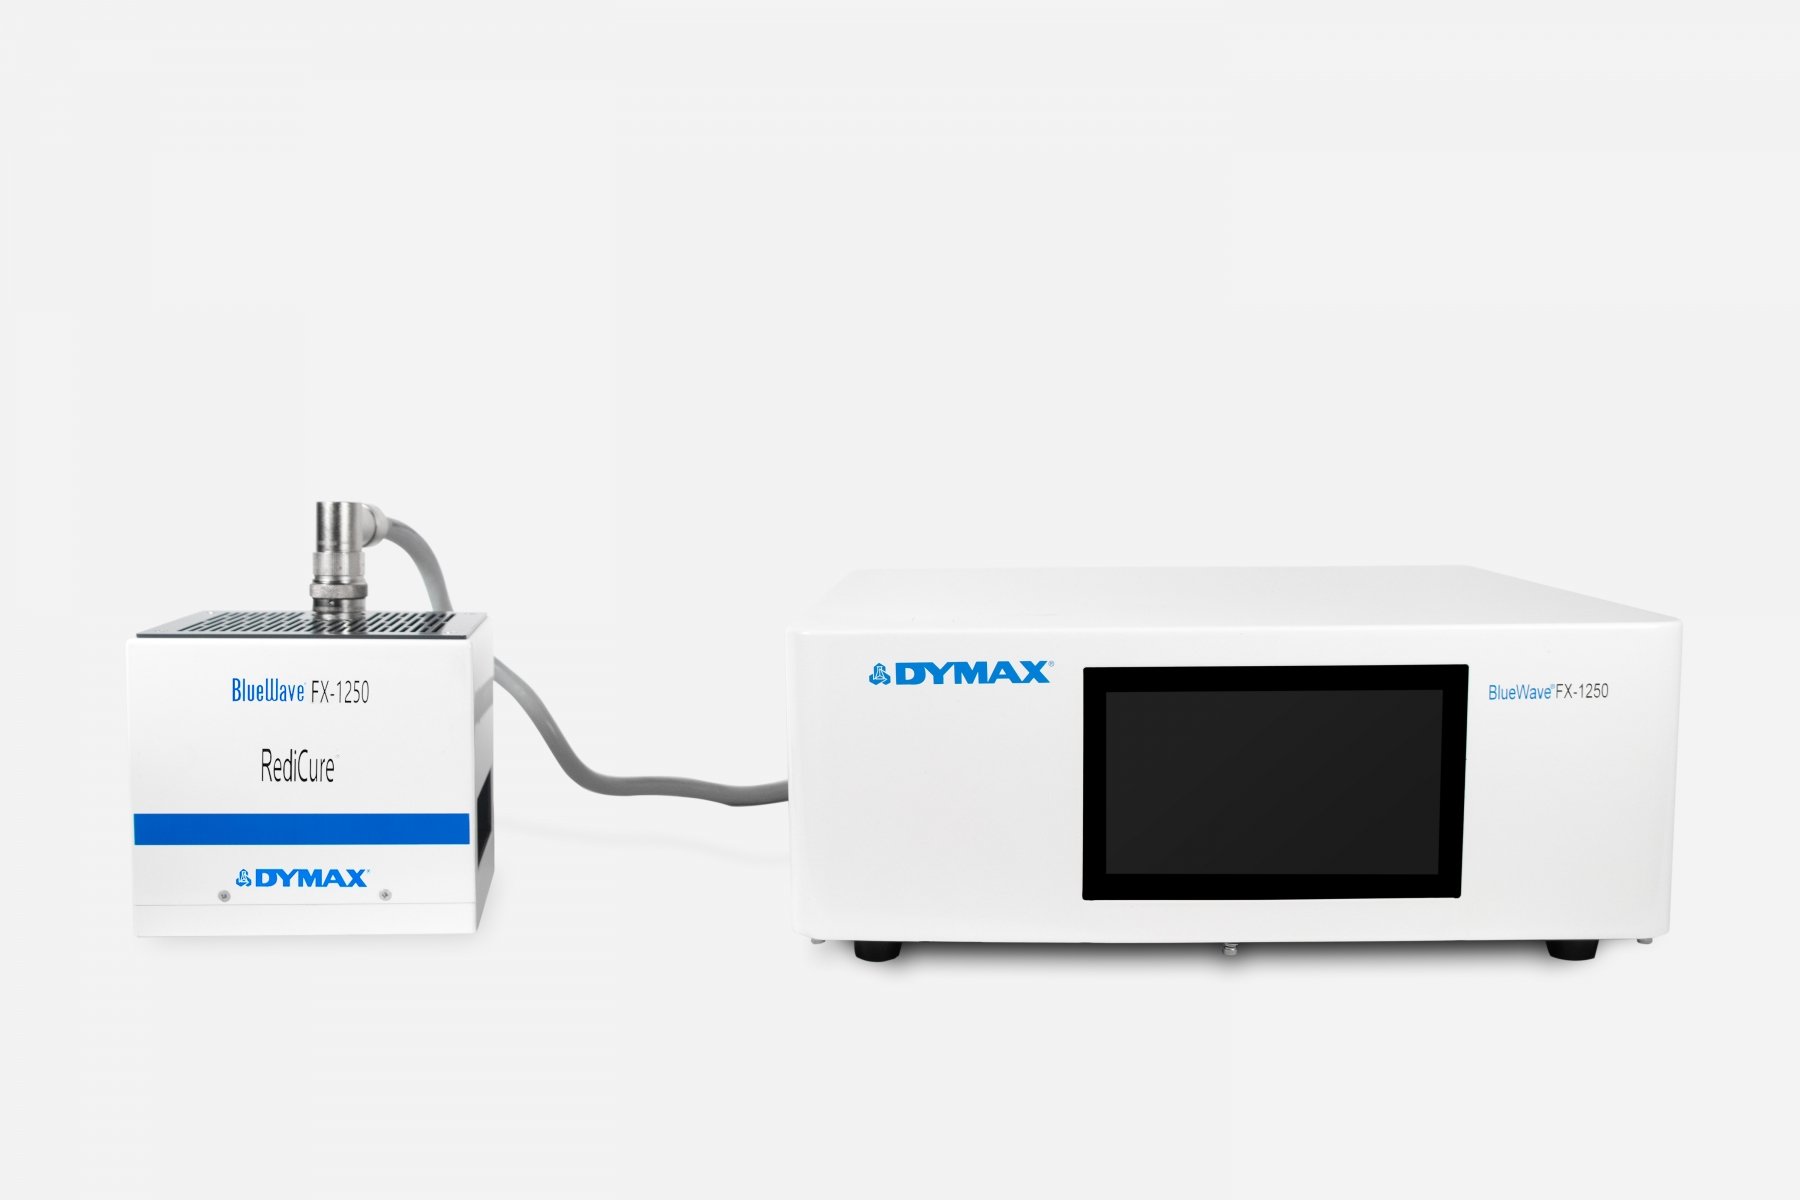 Bluewave FX-1250 LED Flood Lamp Side by Side - White Background